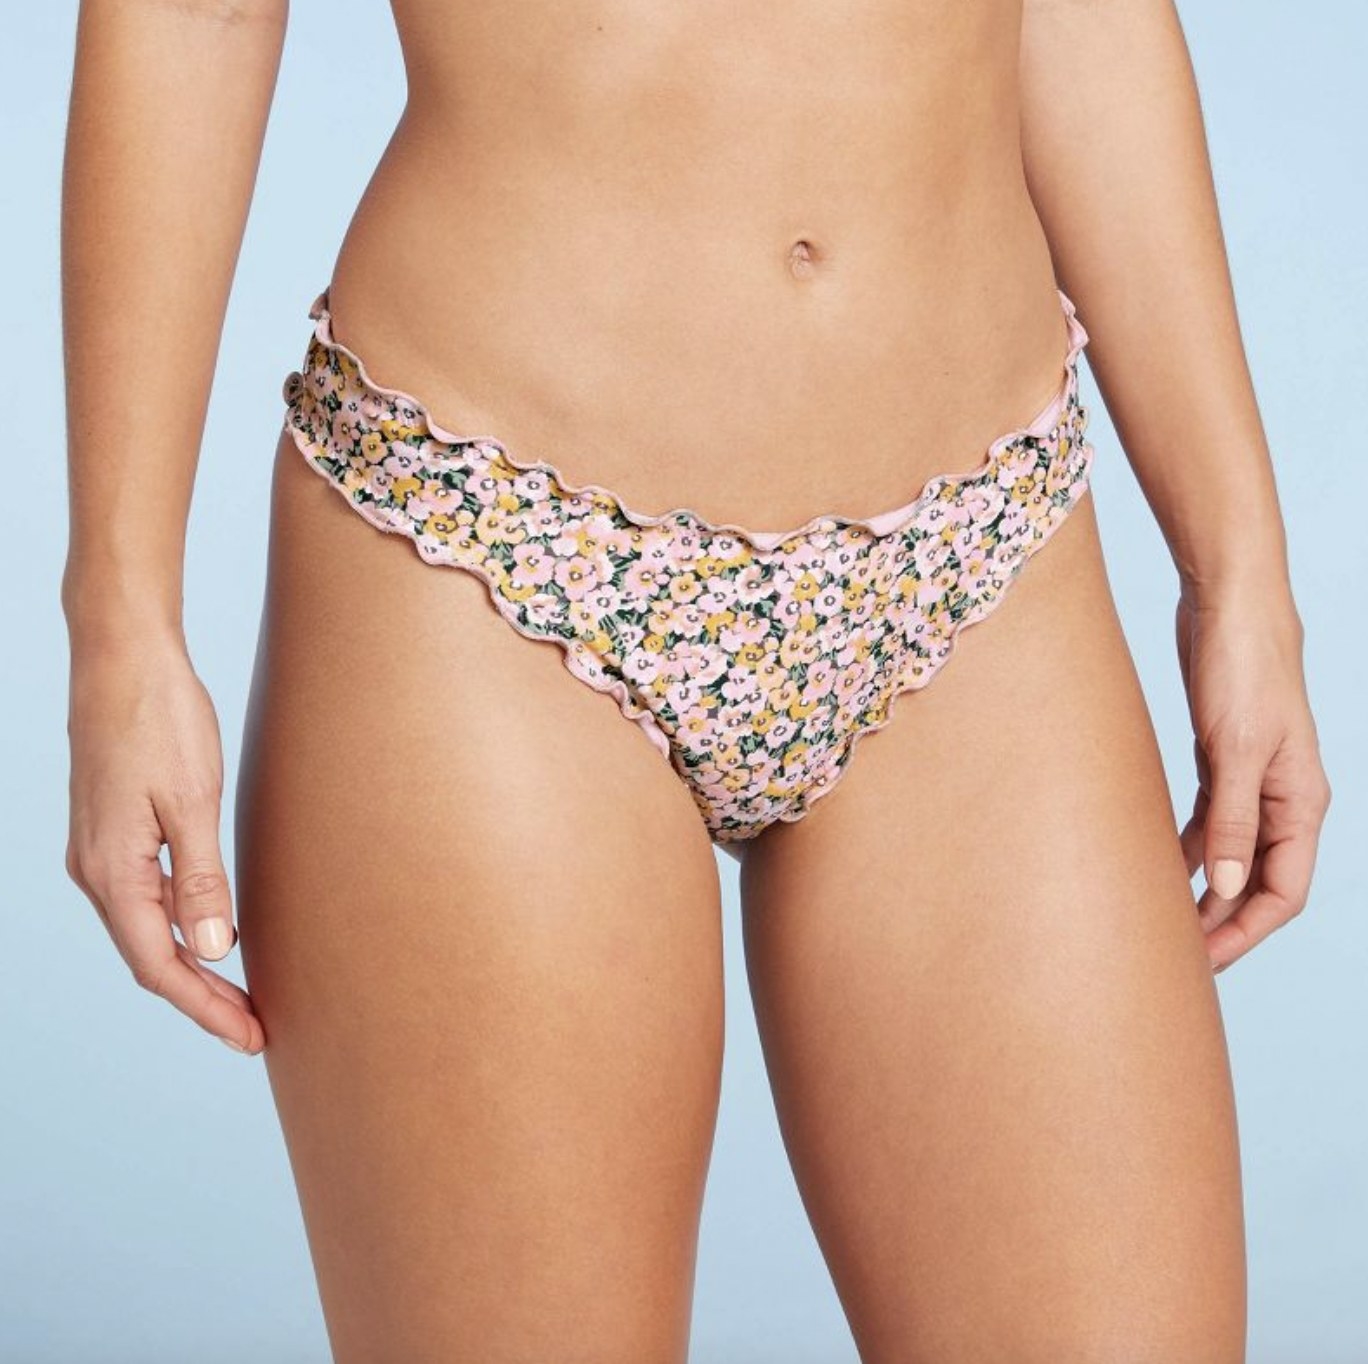 A person wearing a floral bikini bottom with ruffle trim